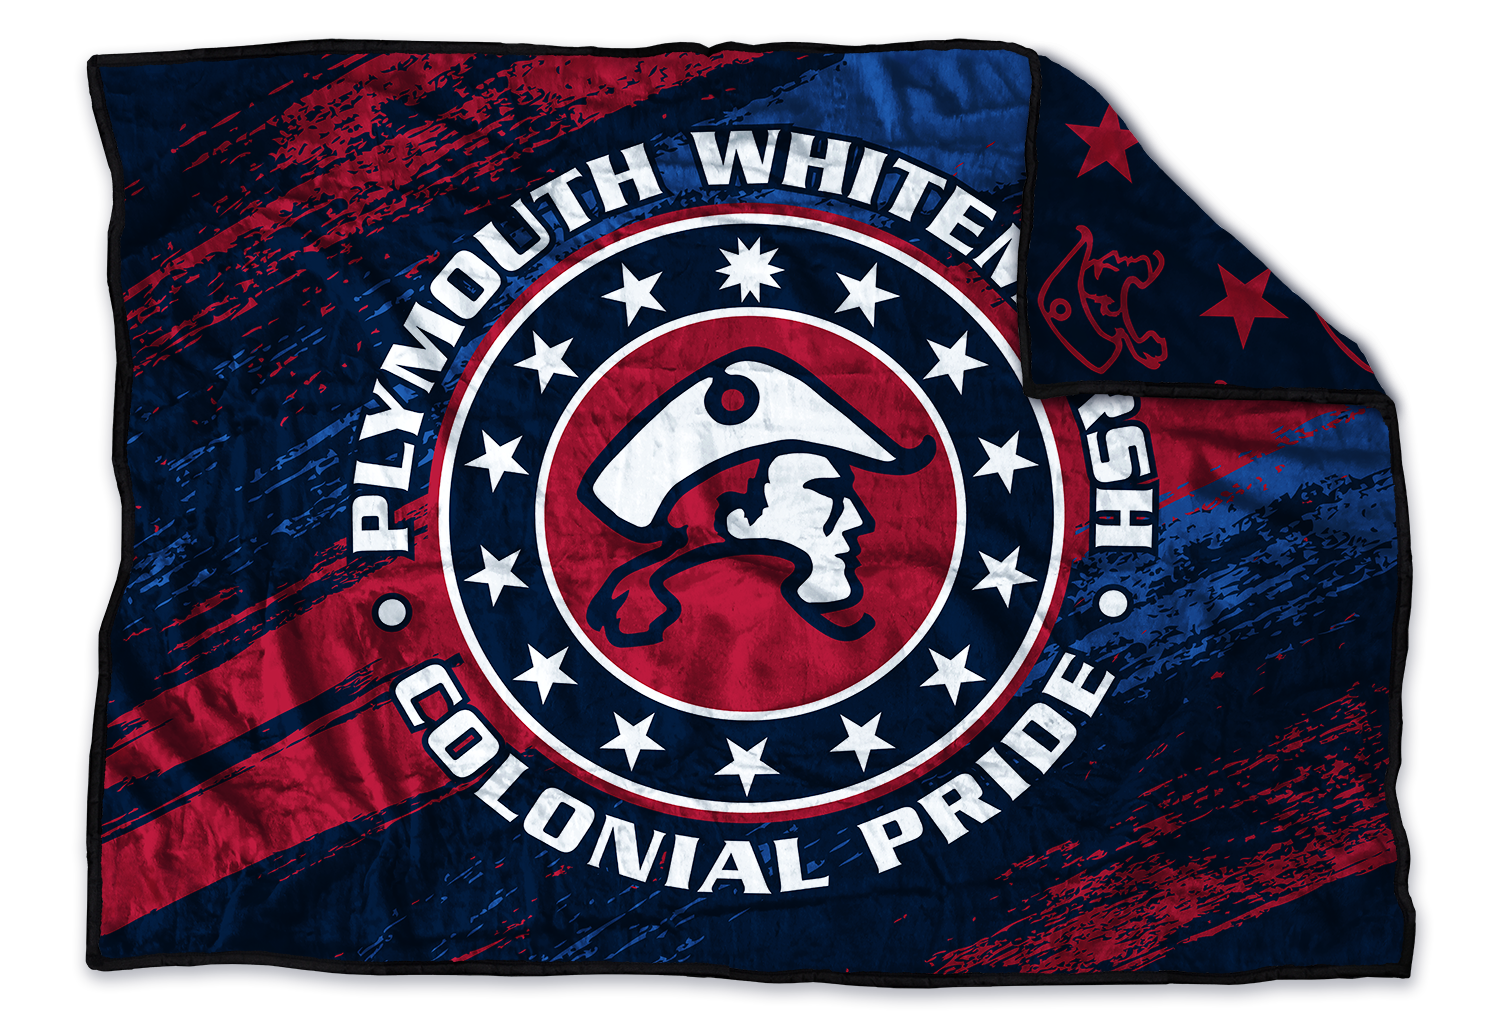 Plymouth Whitemarsh Colonial Pride